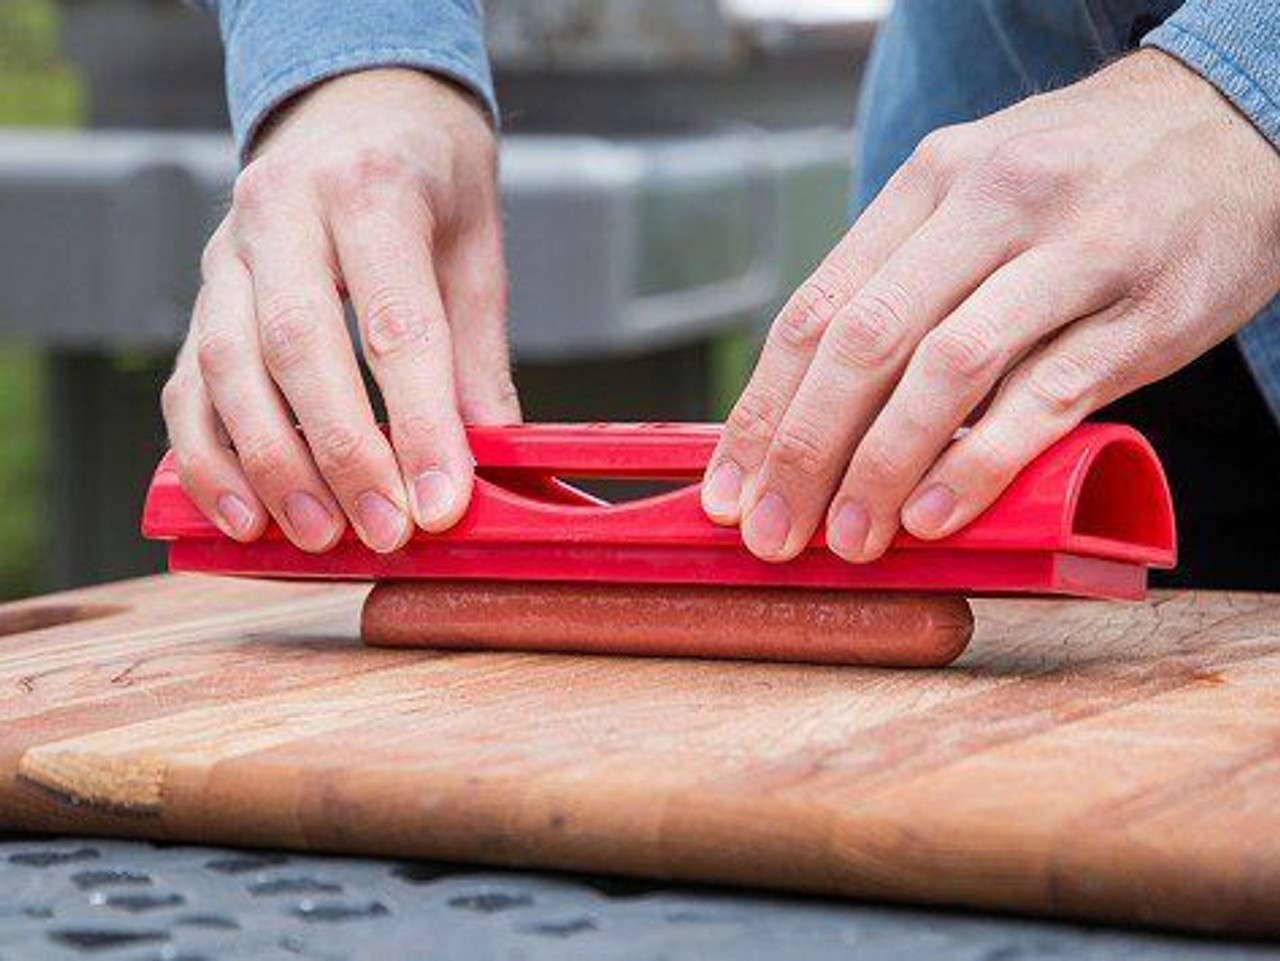 SLOTDOG Hot Dog Crisscross Cutter Slicer Press Gadget Tool for BBQ